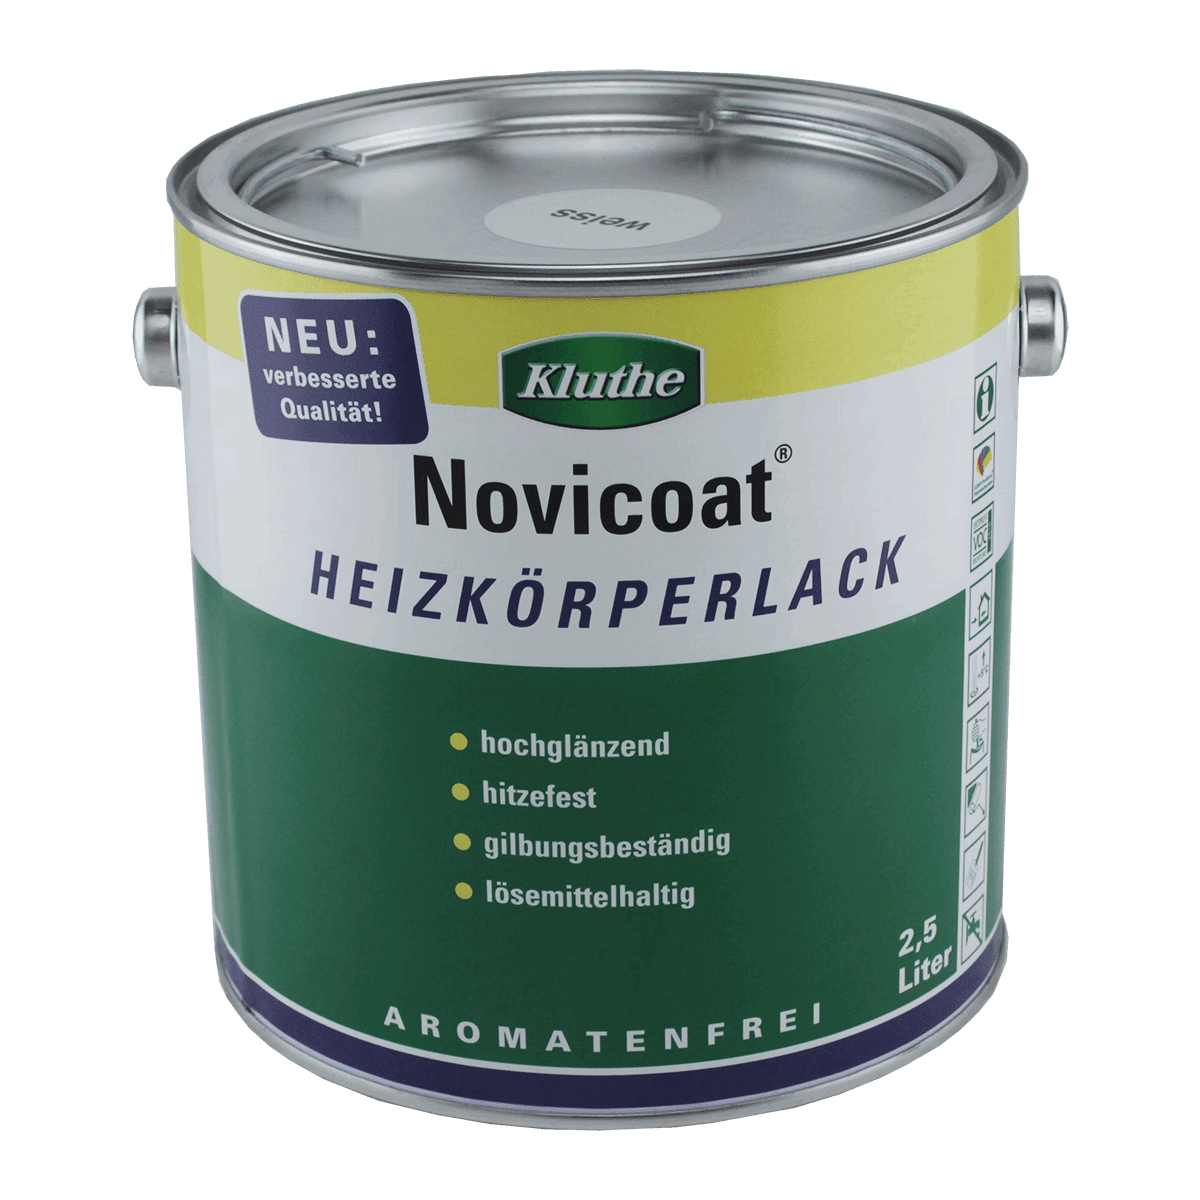 Kluthe Novicoat® Heizkörperlack hochglänzend von Kluthe